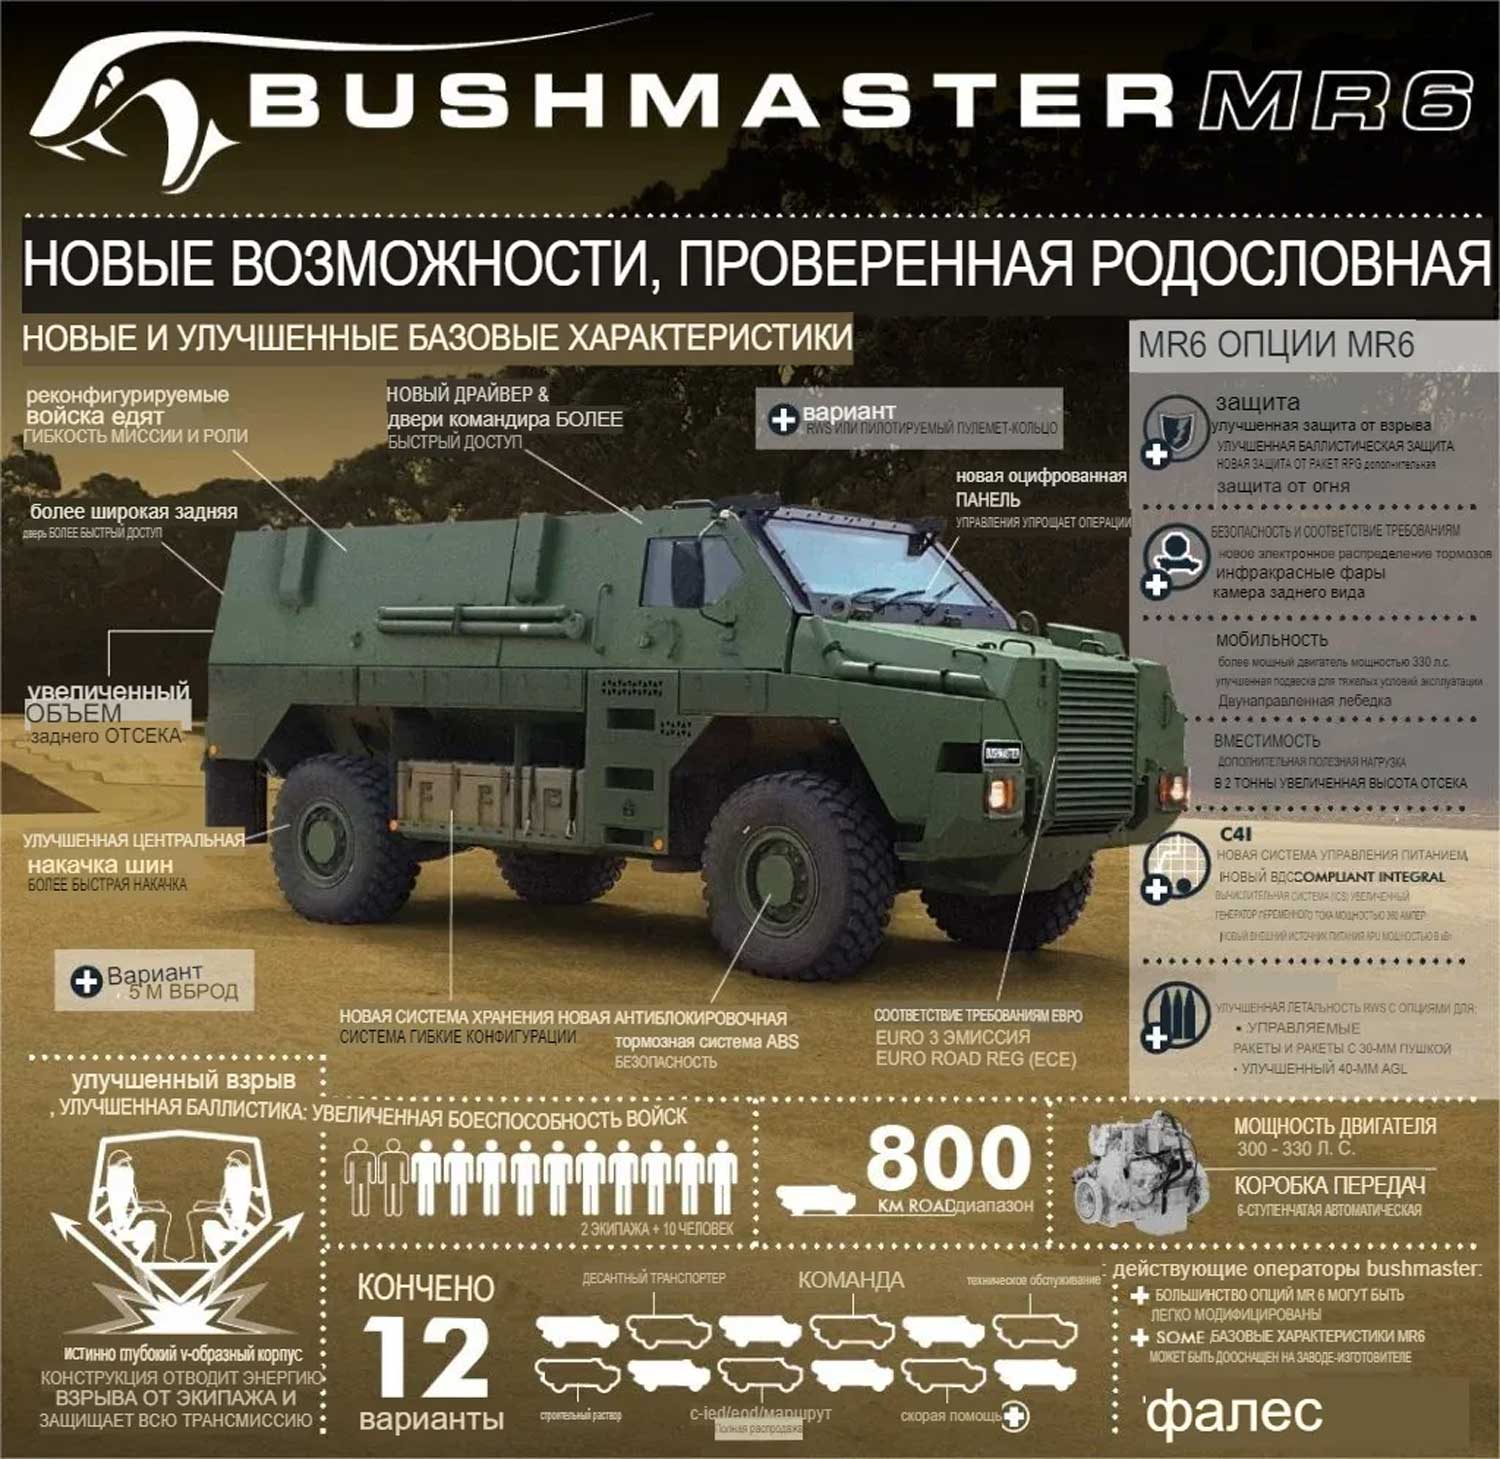 Характеристика бронетранспортера Bushmaster 